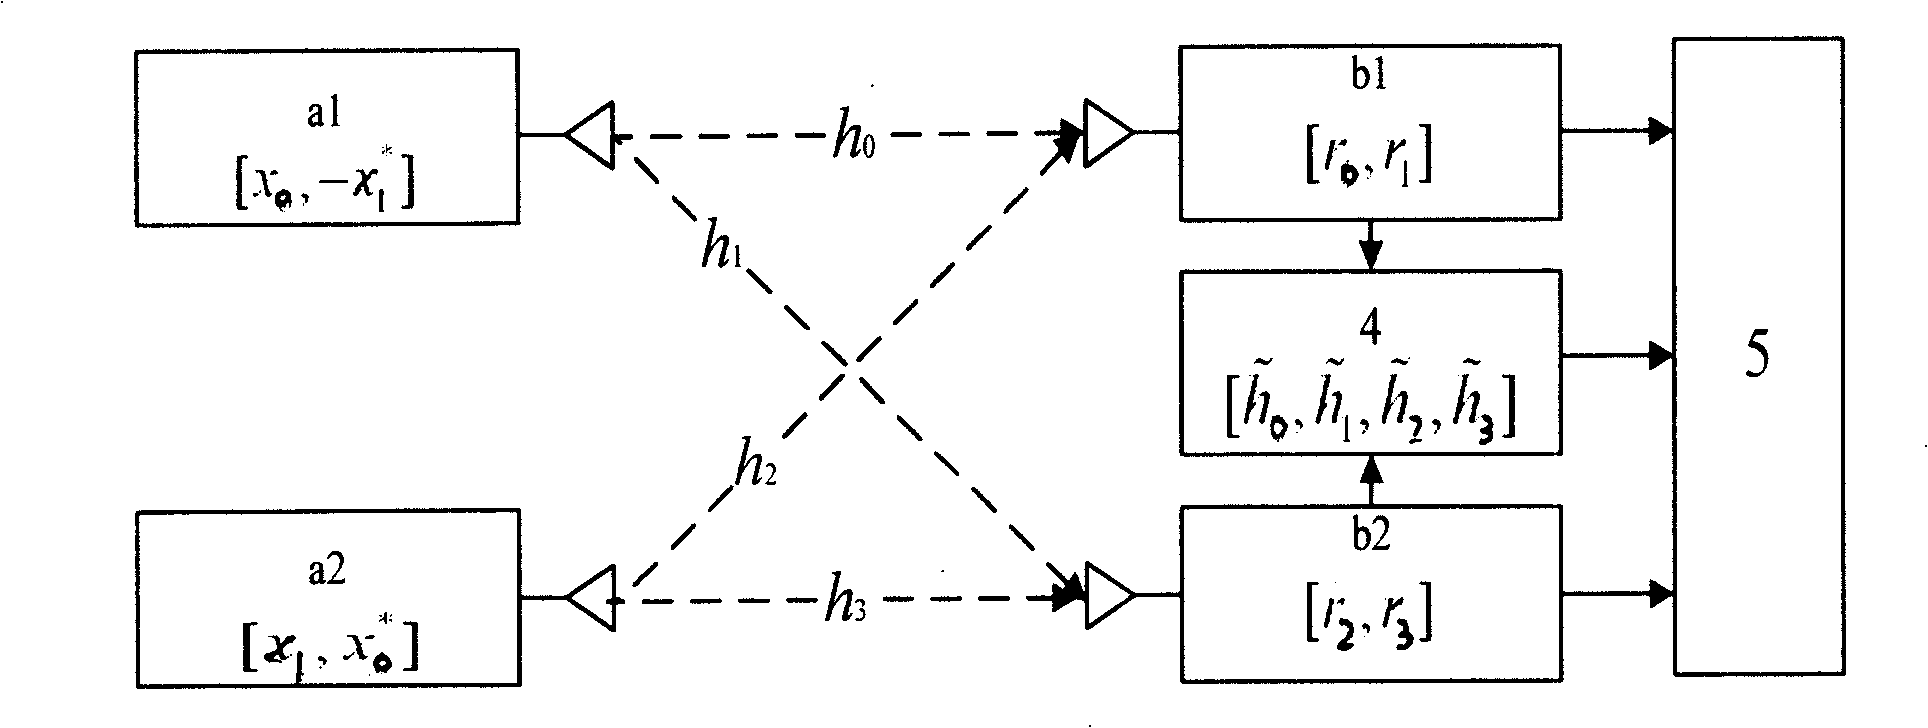 Wavelet domani value denoising method for maximum likelihood estimator based on wavelet denoising algorithm